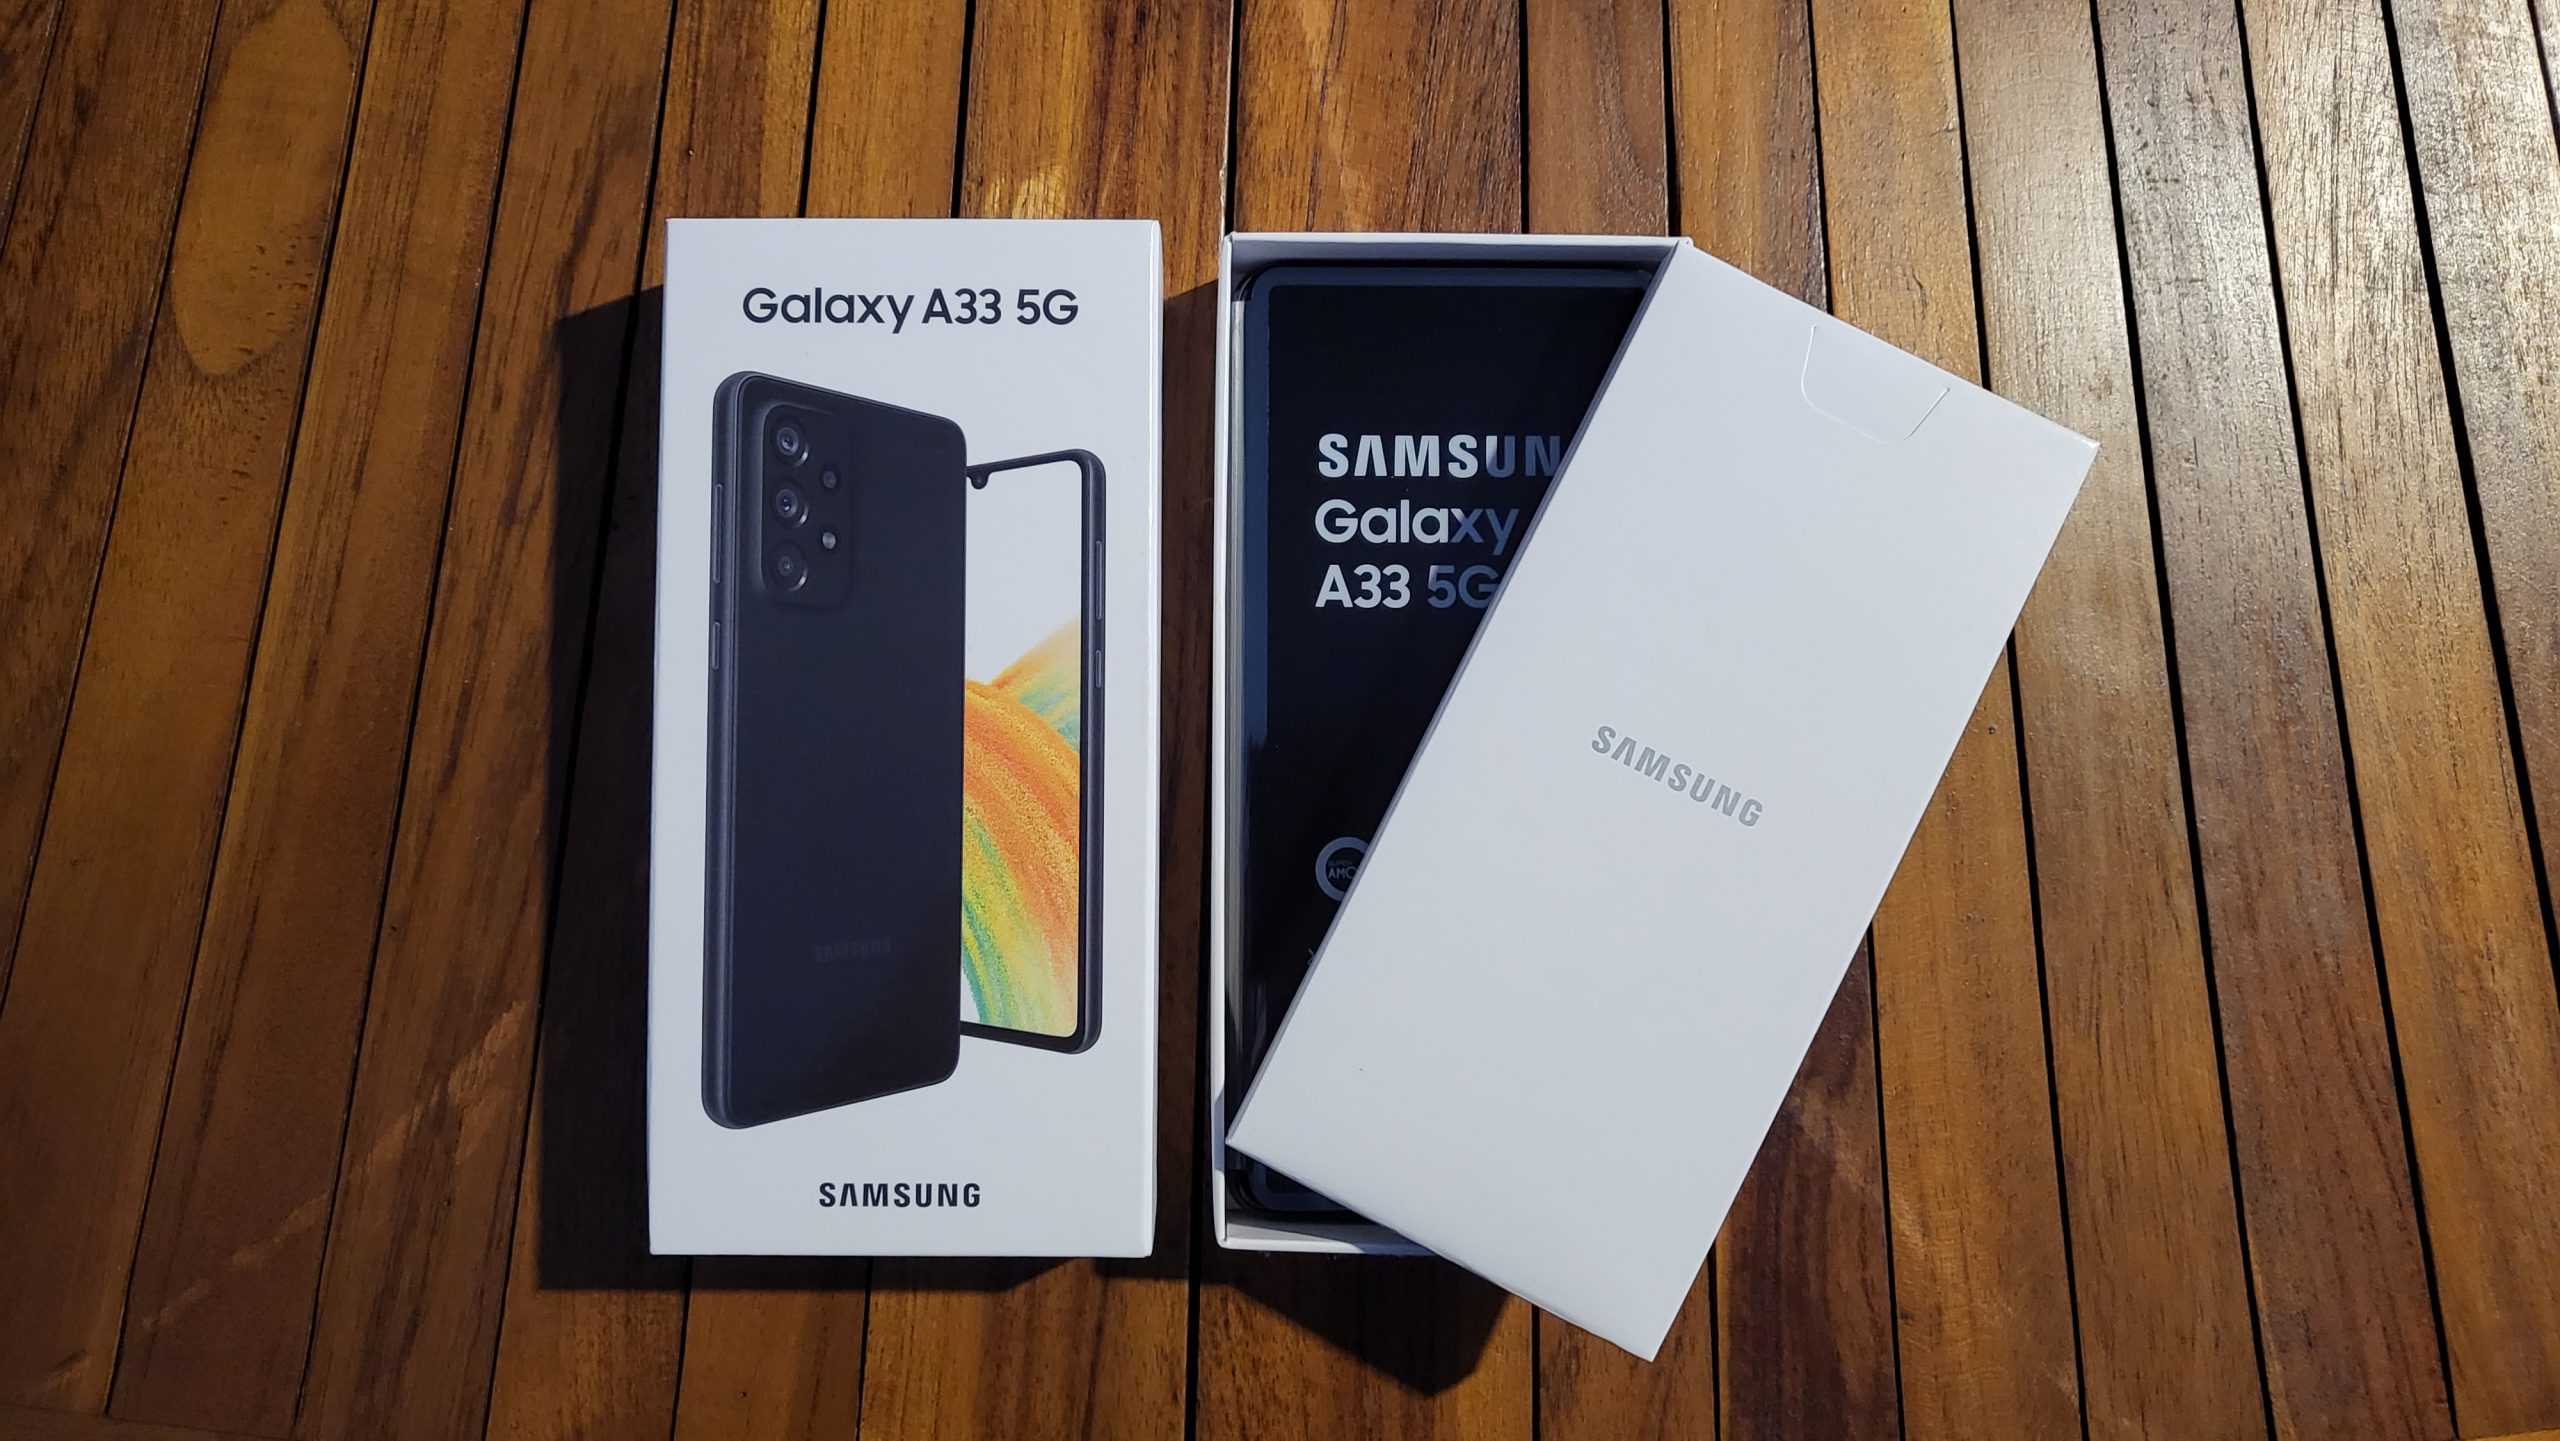 Unboxing SAMSUNG Galaxy A33 5G - Black 